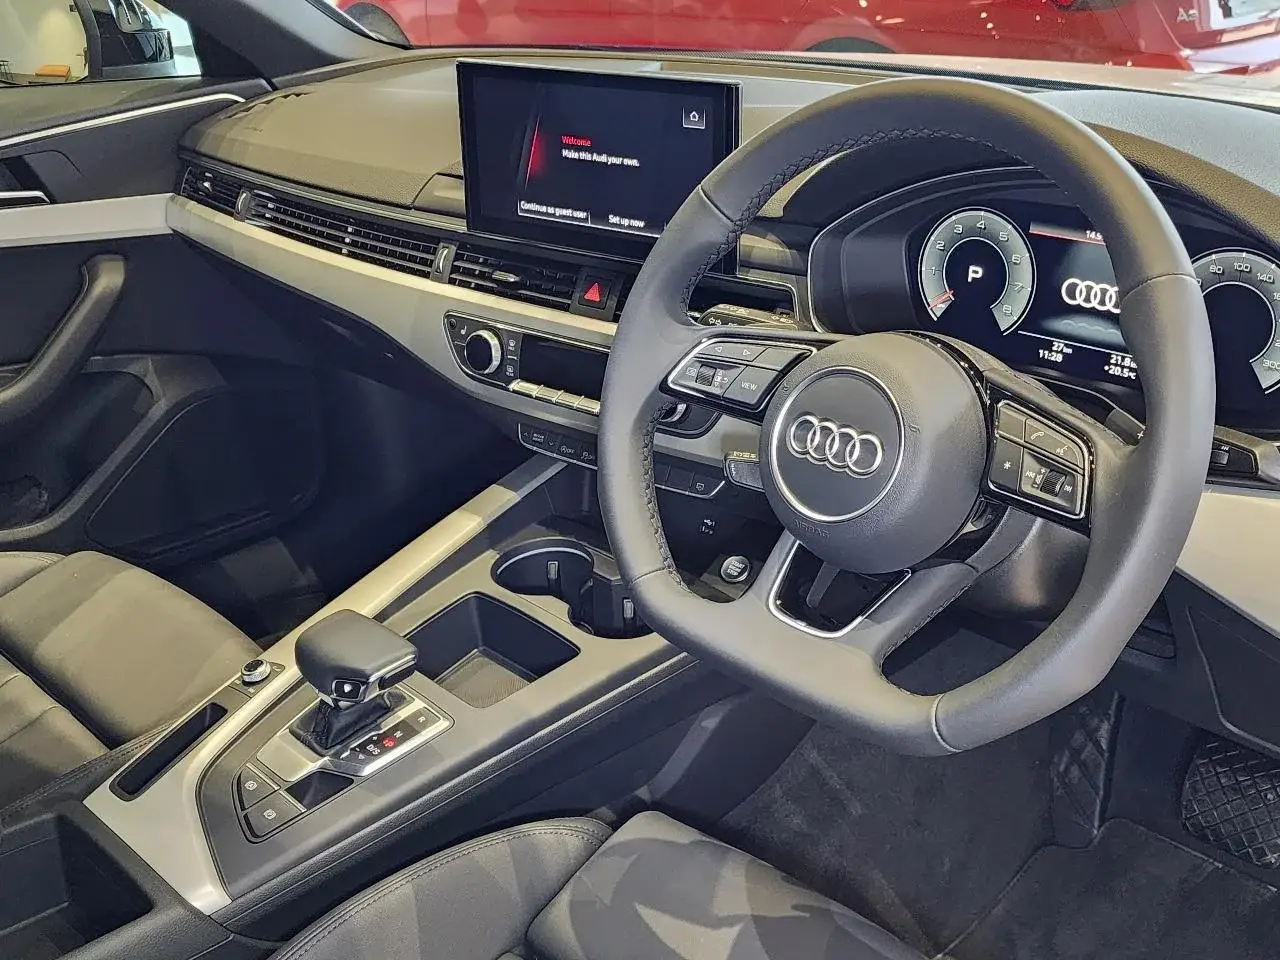 Audi A4 for Sale in Nairobi

